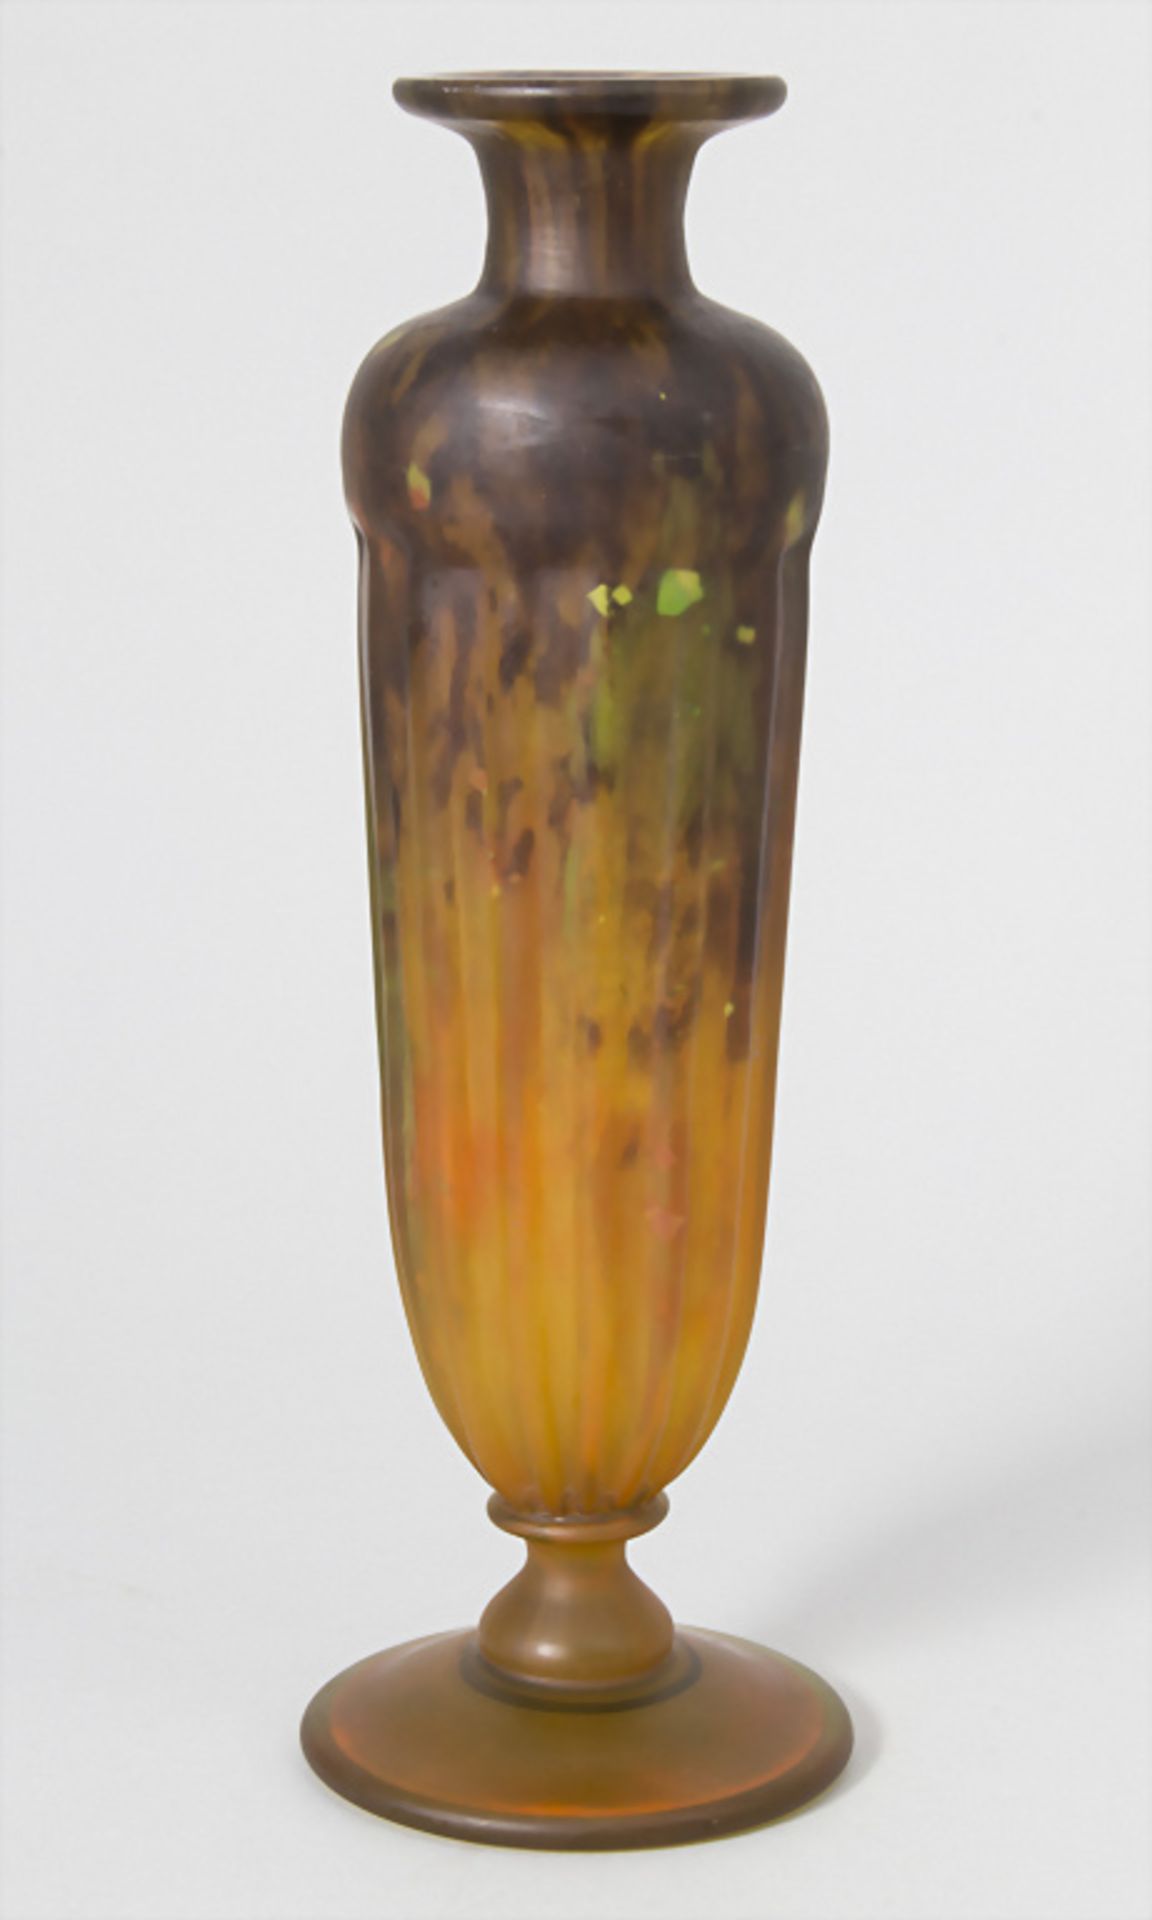 Jugendstil Vase / Art Nouveau glass vase, Daum Frères, Ecole de Nancy, Frankreich, um 1900 - Image 3 of 7